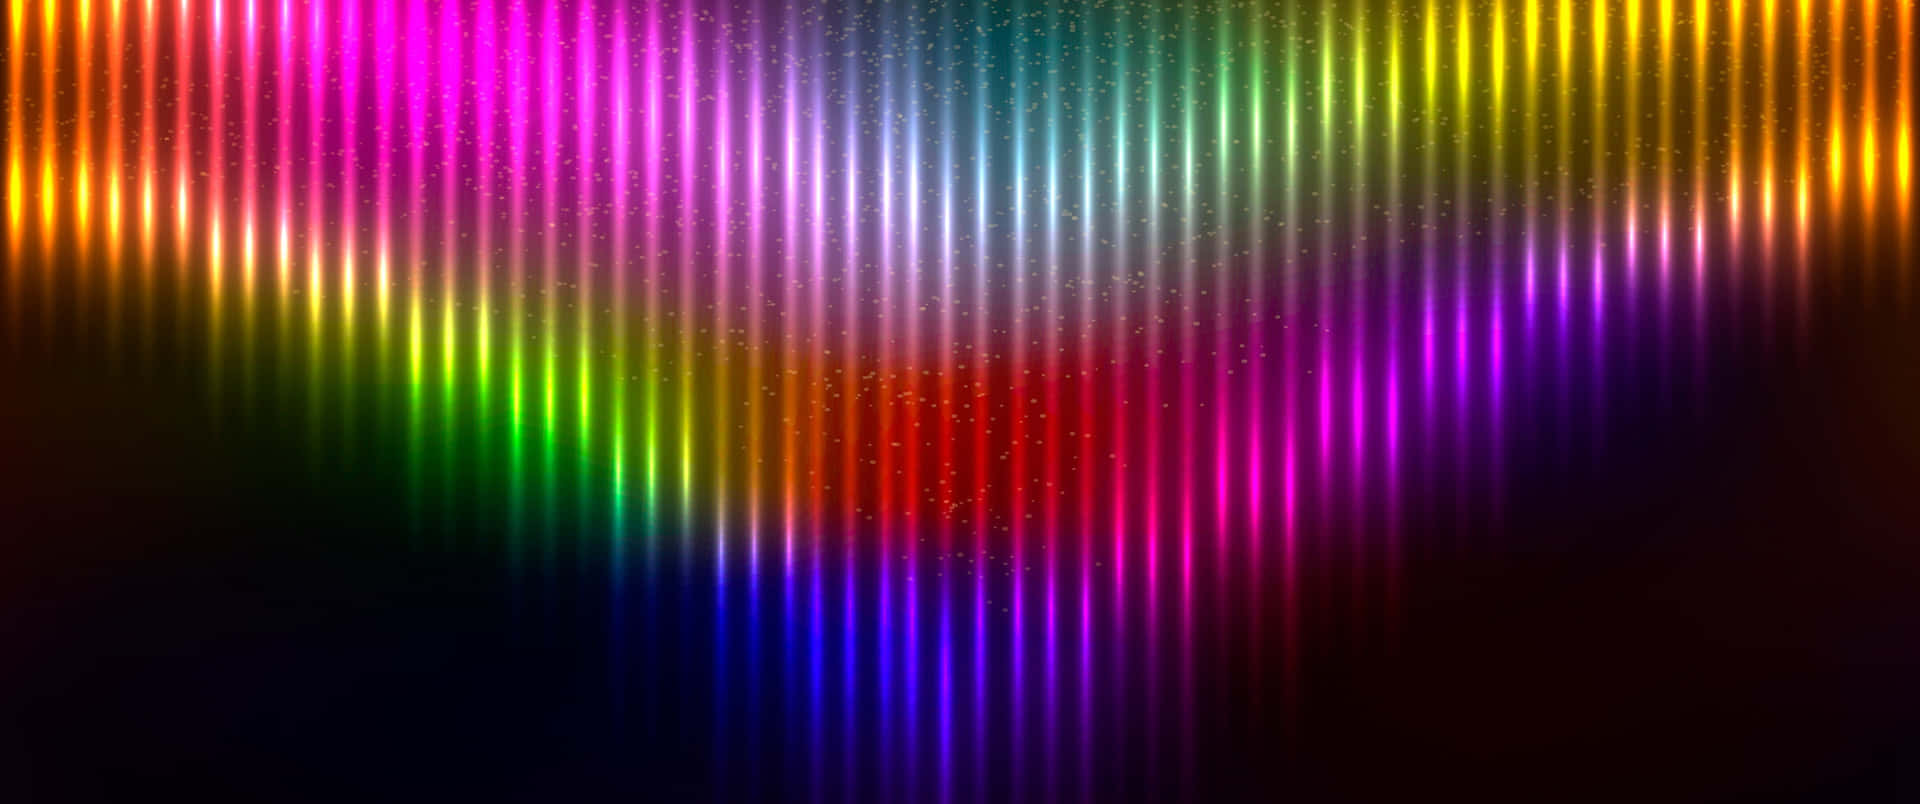 3440x1440 Neon Line Curtain Digital Art Wallpaper